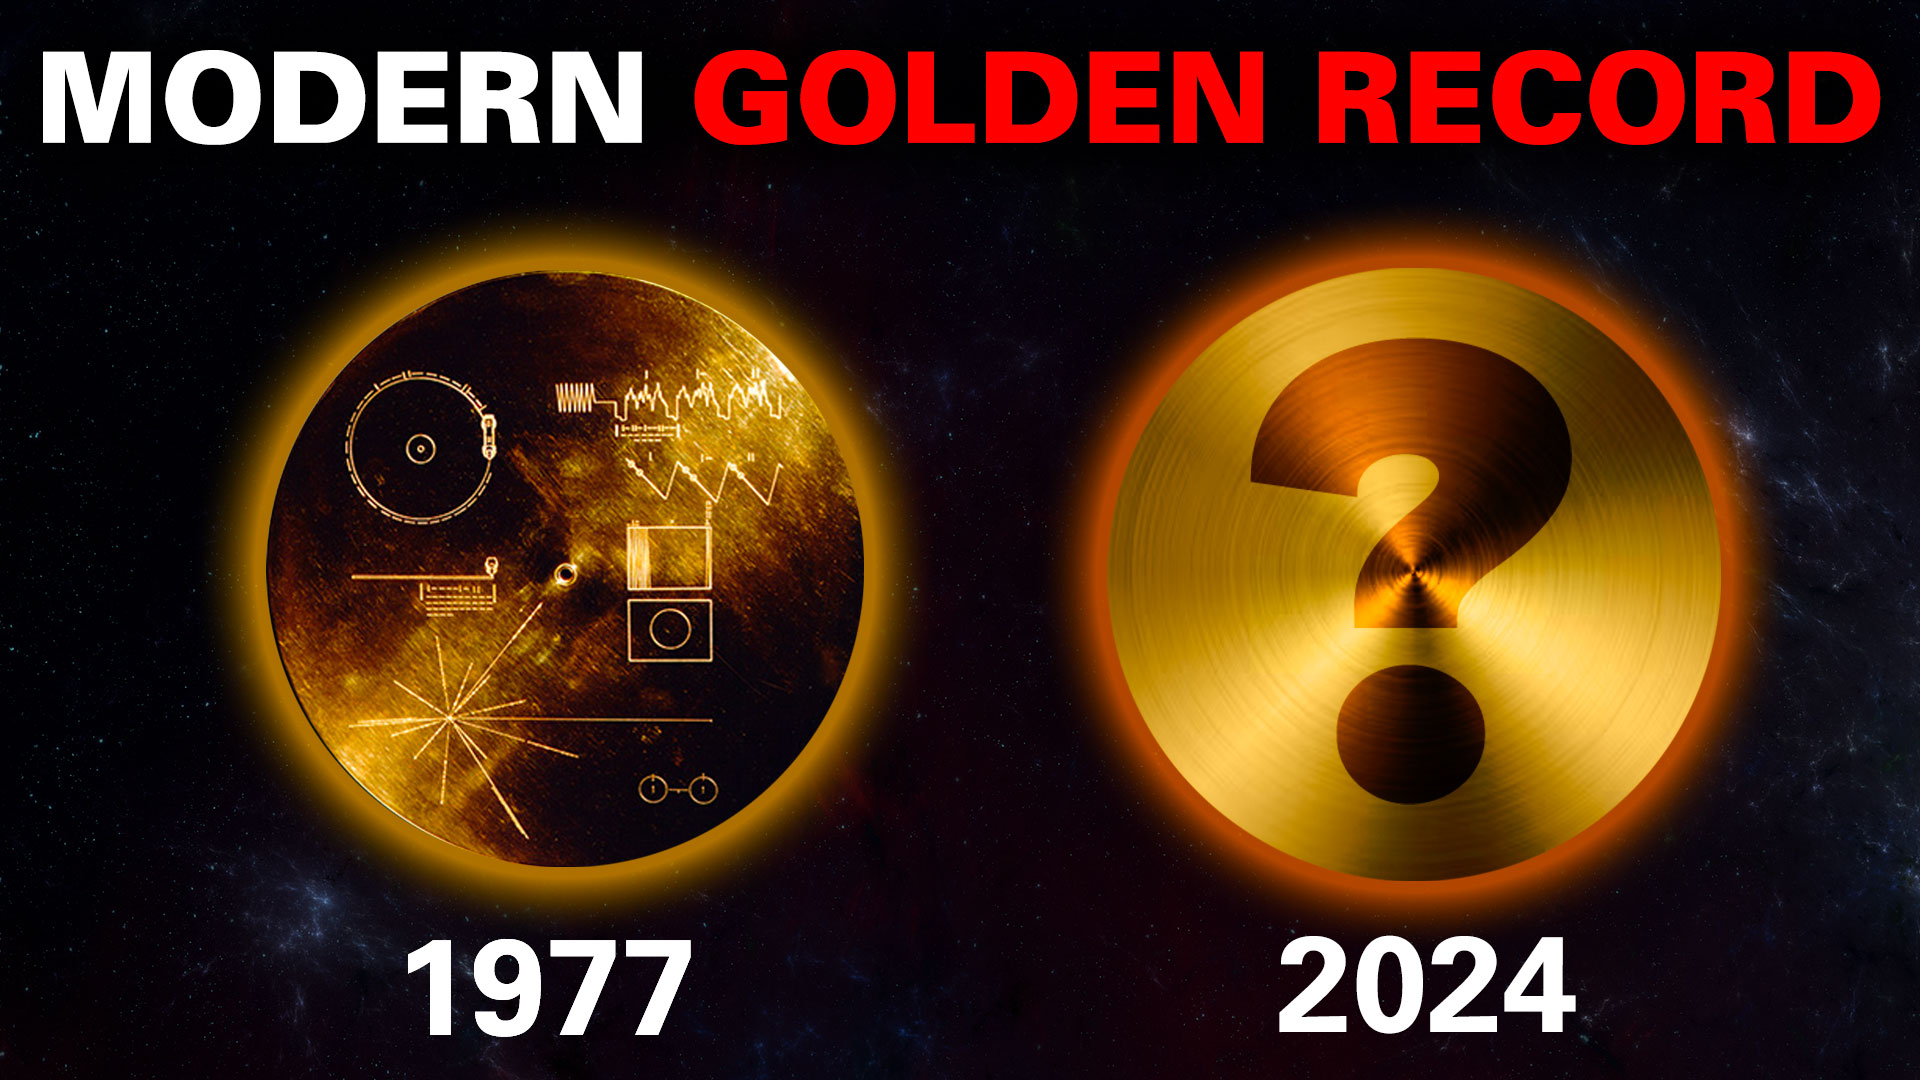 Voyager's Golden Record. Credit: NASA/JPL